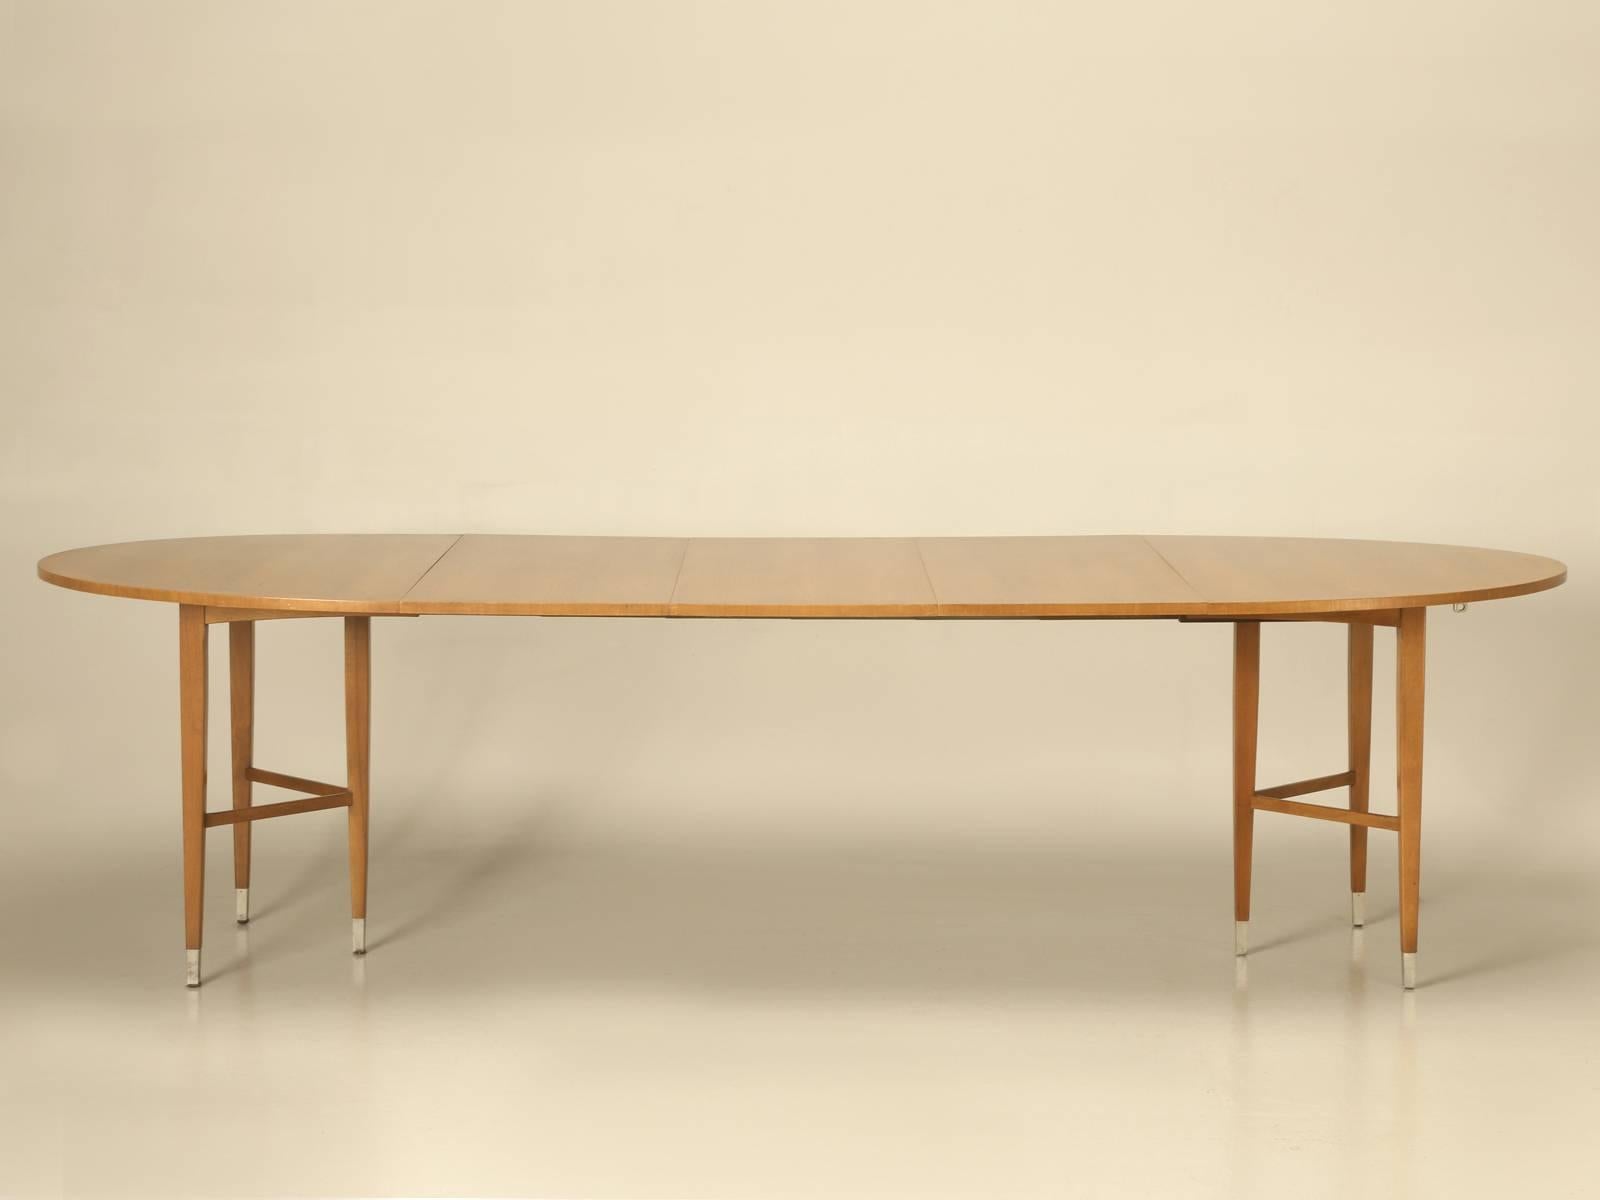 Scandinavian Modern Mid-Century Modern Dining Table by the Sligh Furniture Company